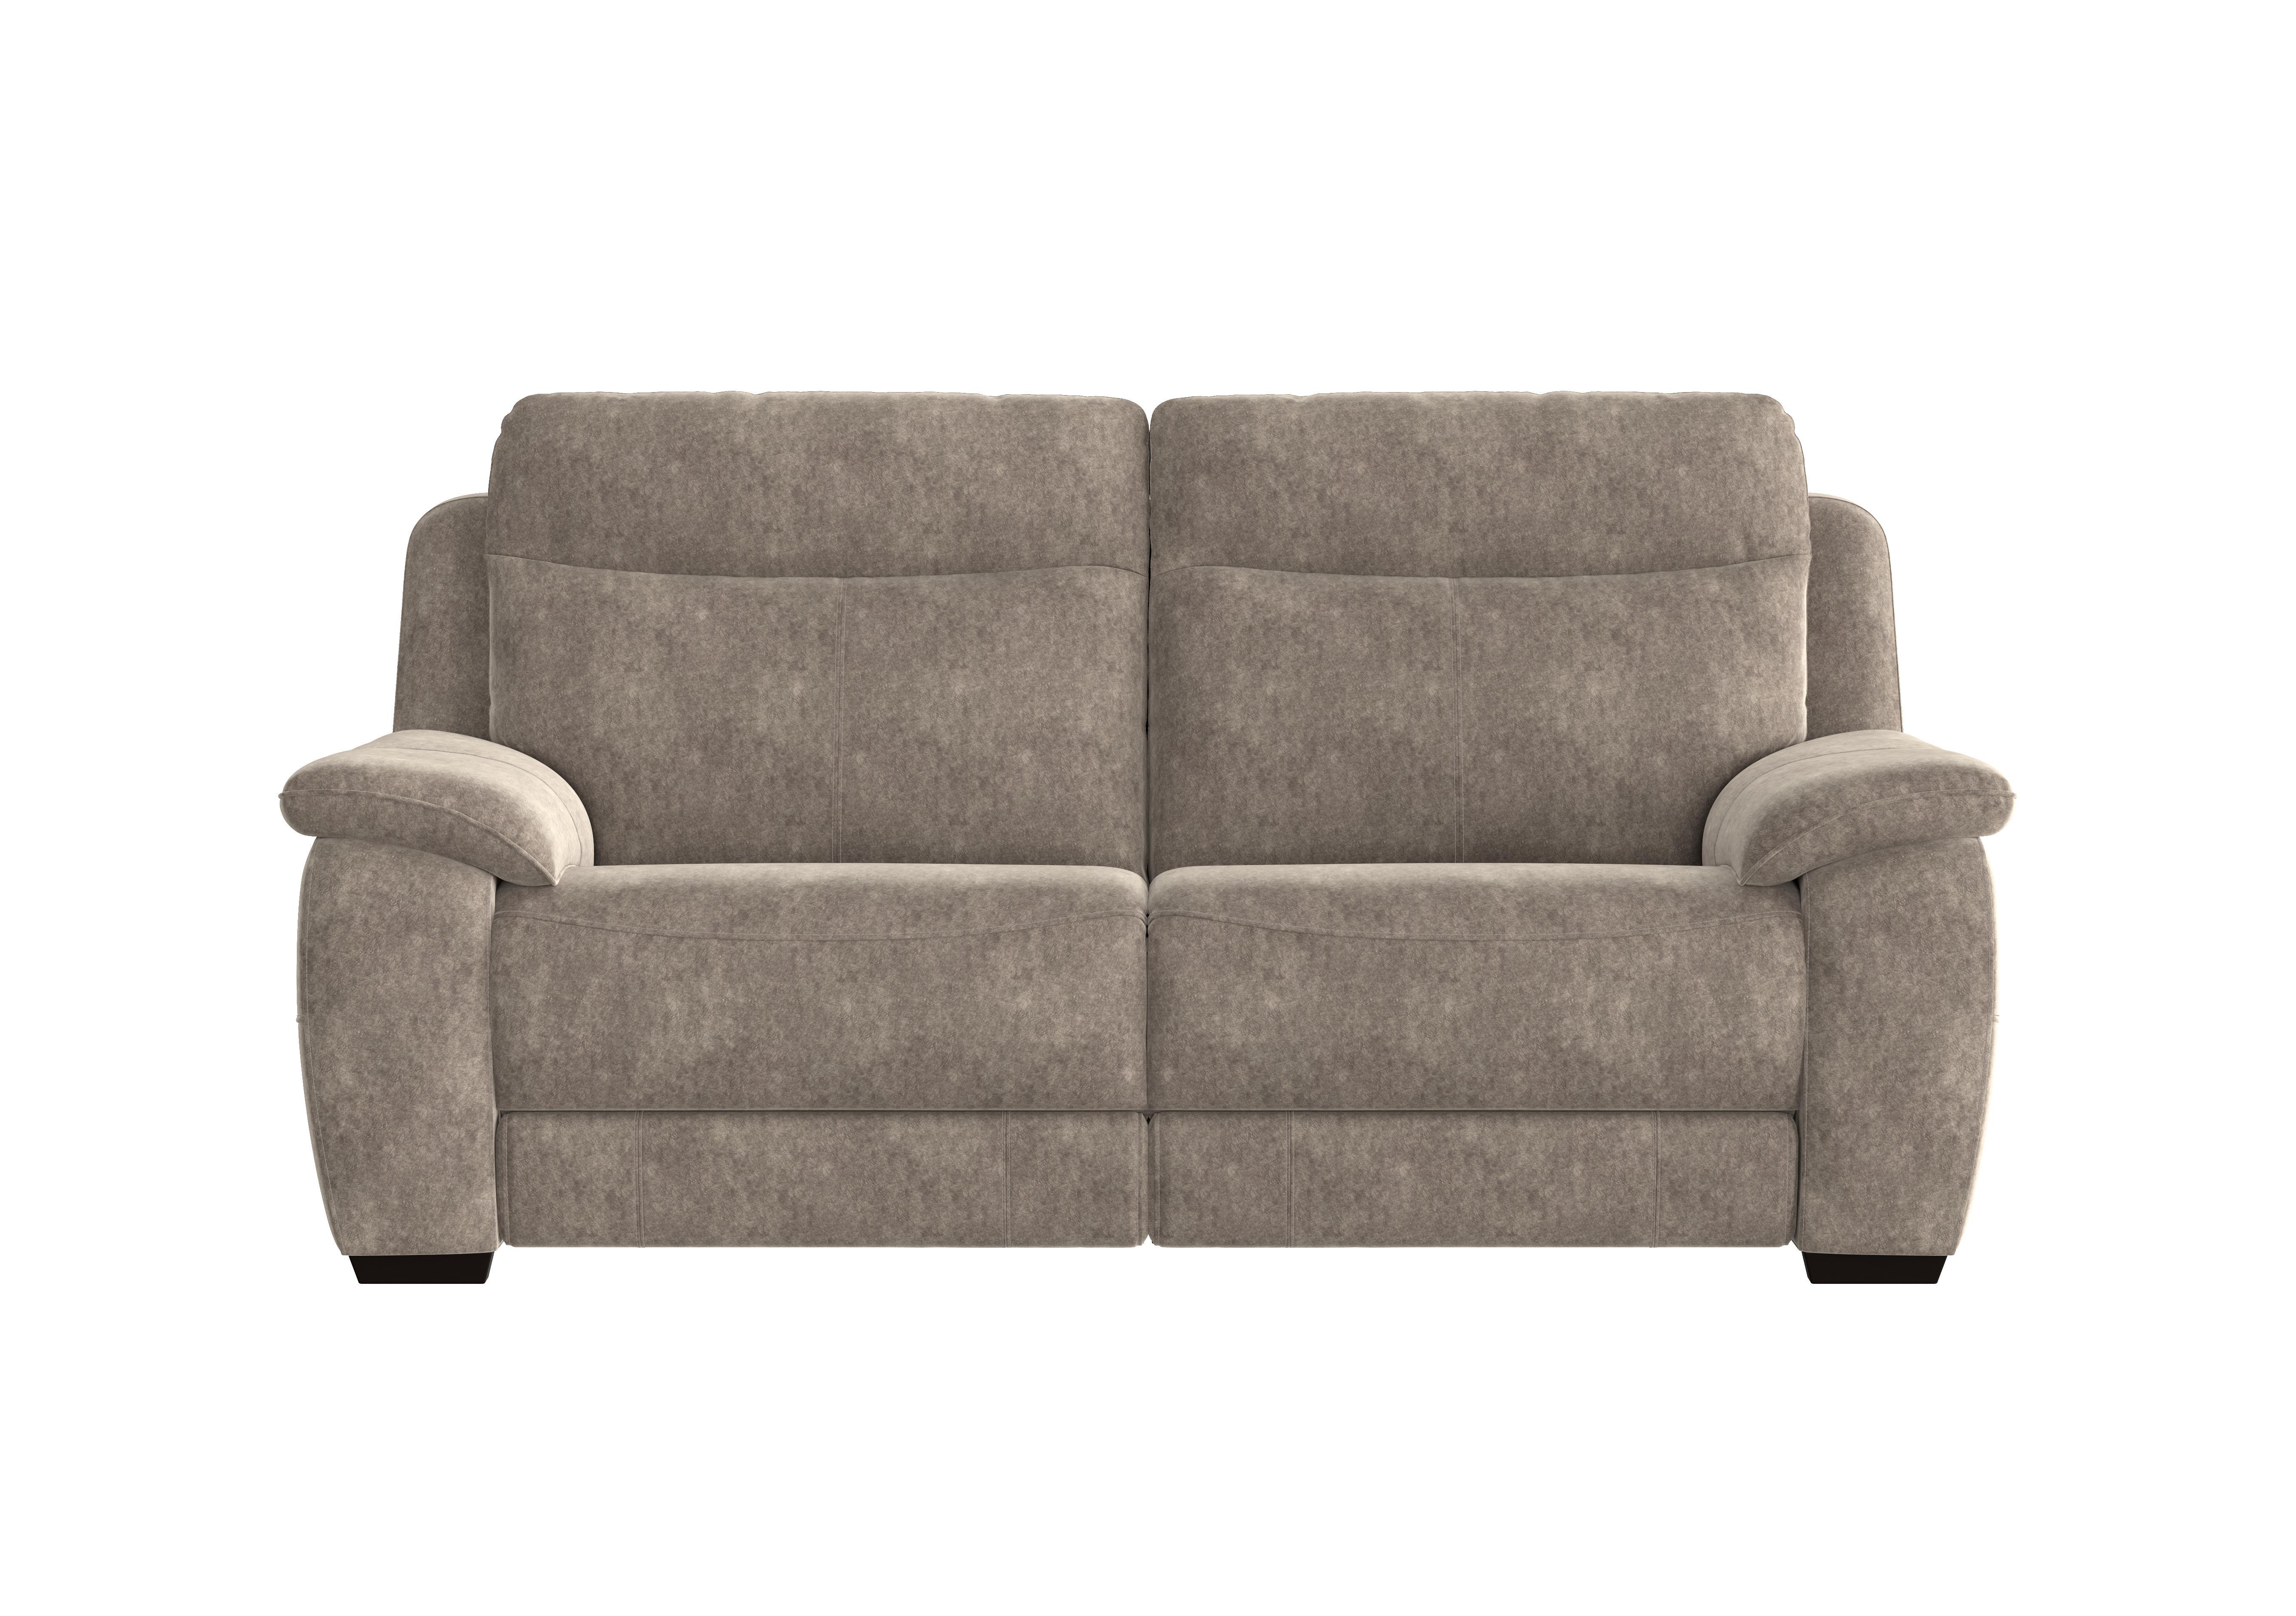 Starlight Express 3 Seater Fabric Recliner Sofa with Power Headrests in Bfa-Bnn-R29 Fv1 Mink on Furniture Village